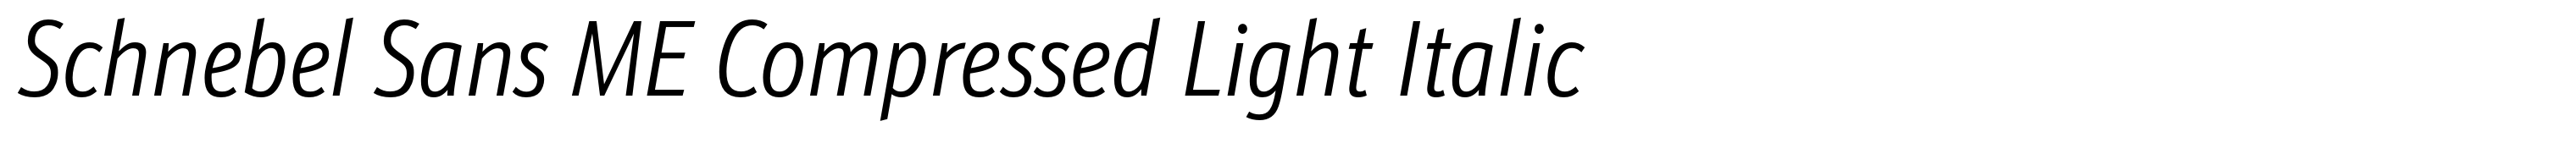 Schnebel Sans ME Compressed Light Italic